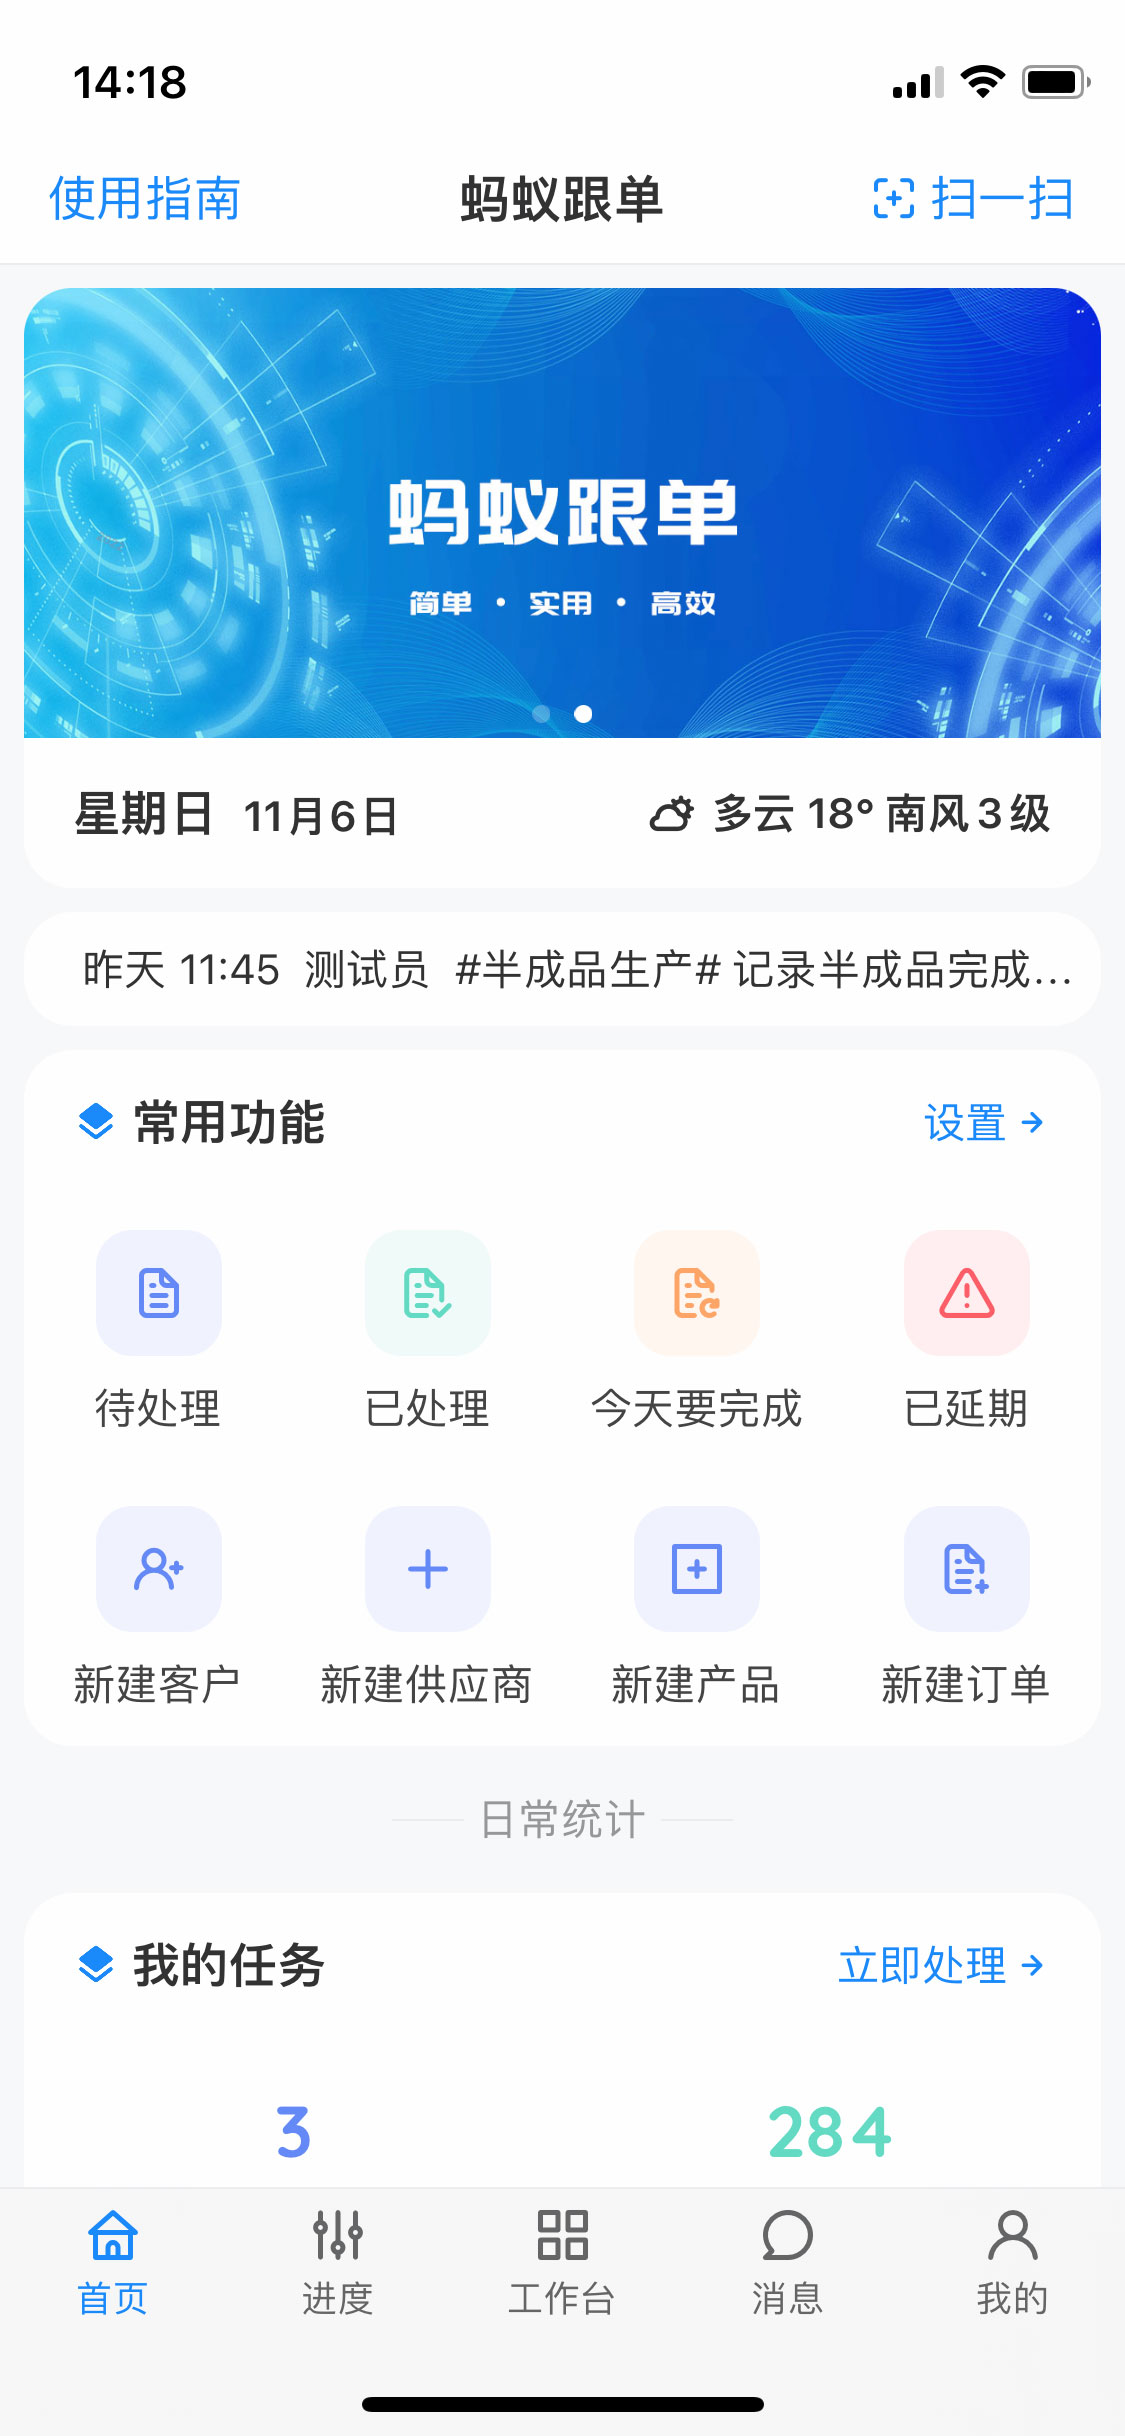 App screen